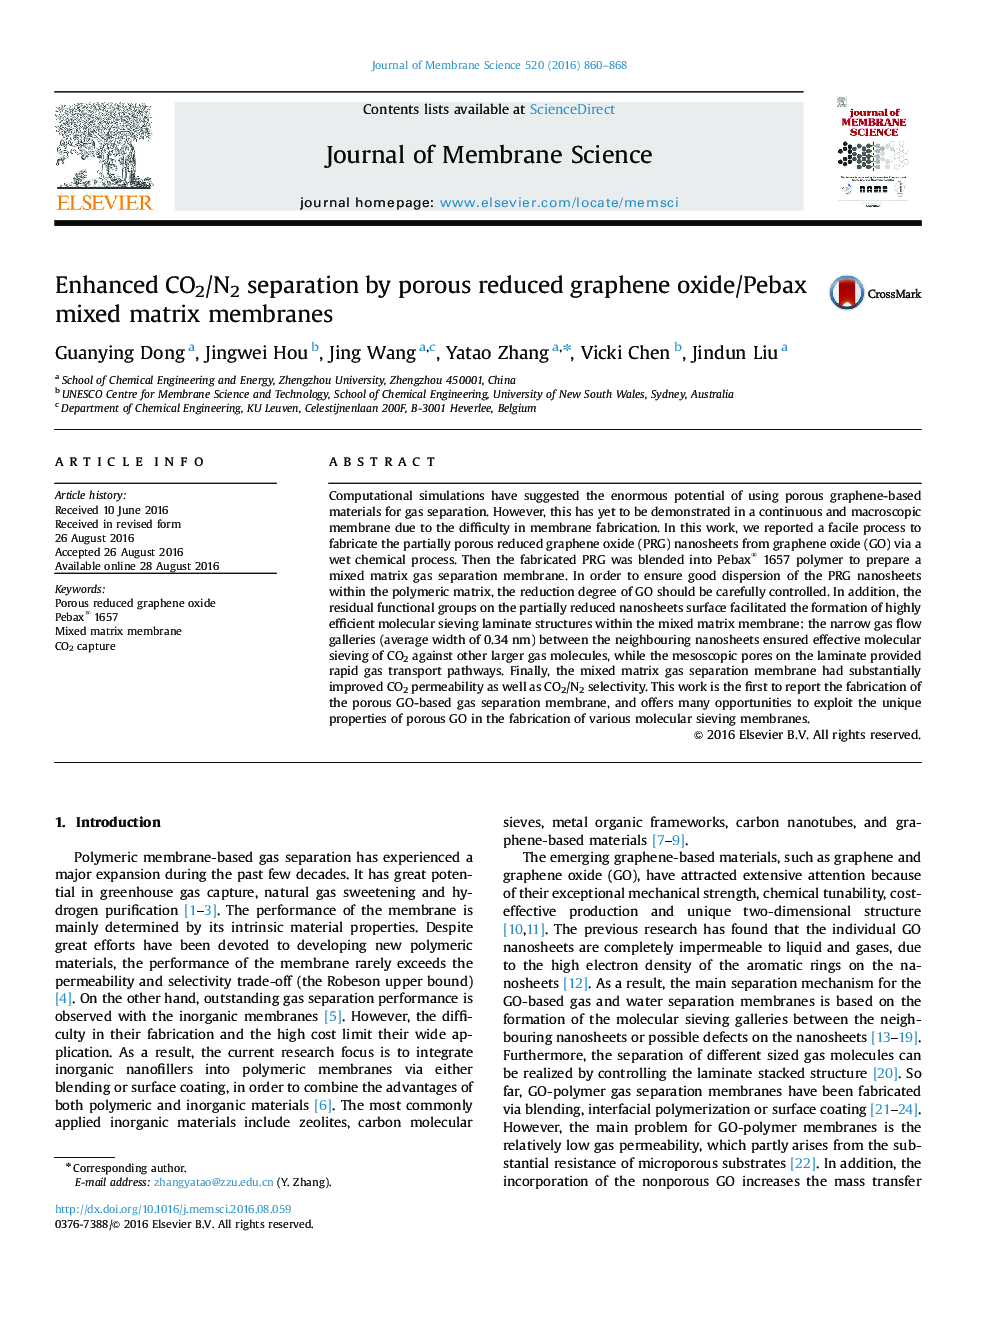 Enhanced CO2/N2 separation by porous reduced graphene oxide/Pebax mixed matrix membranes